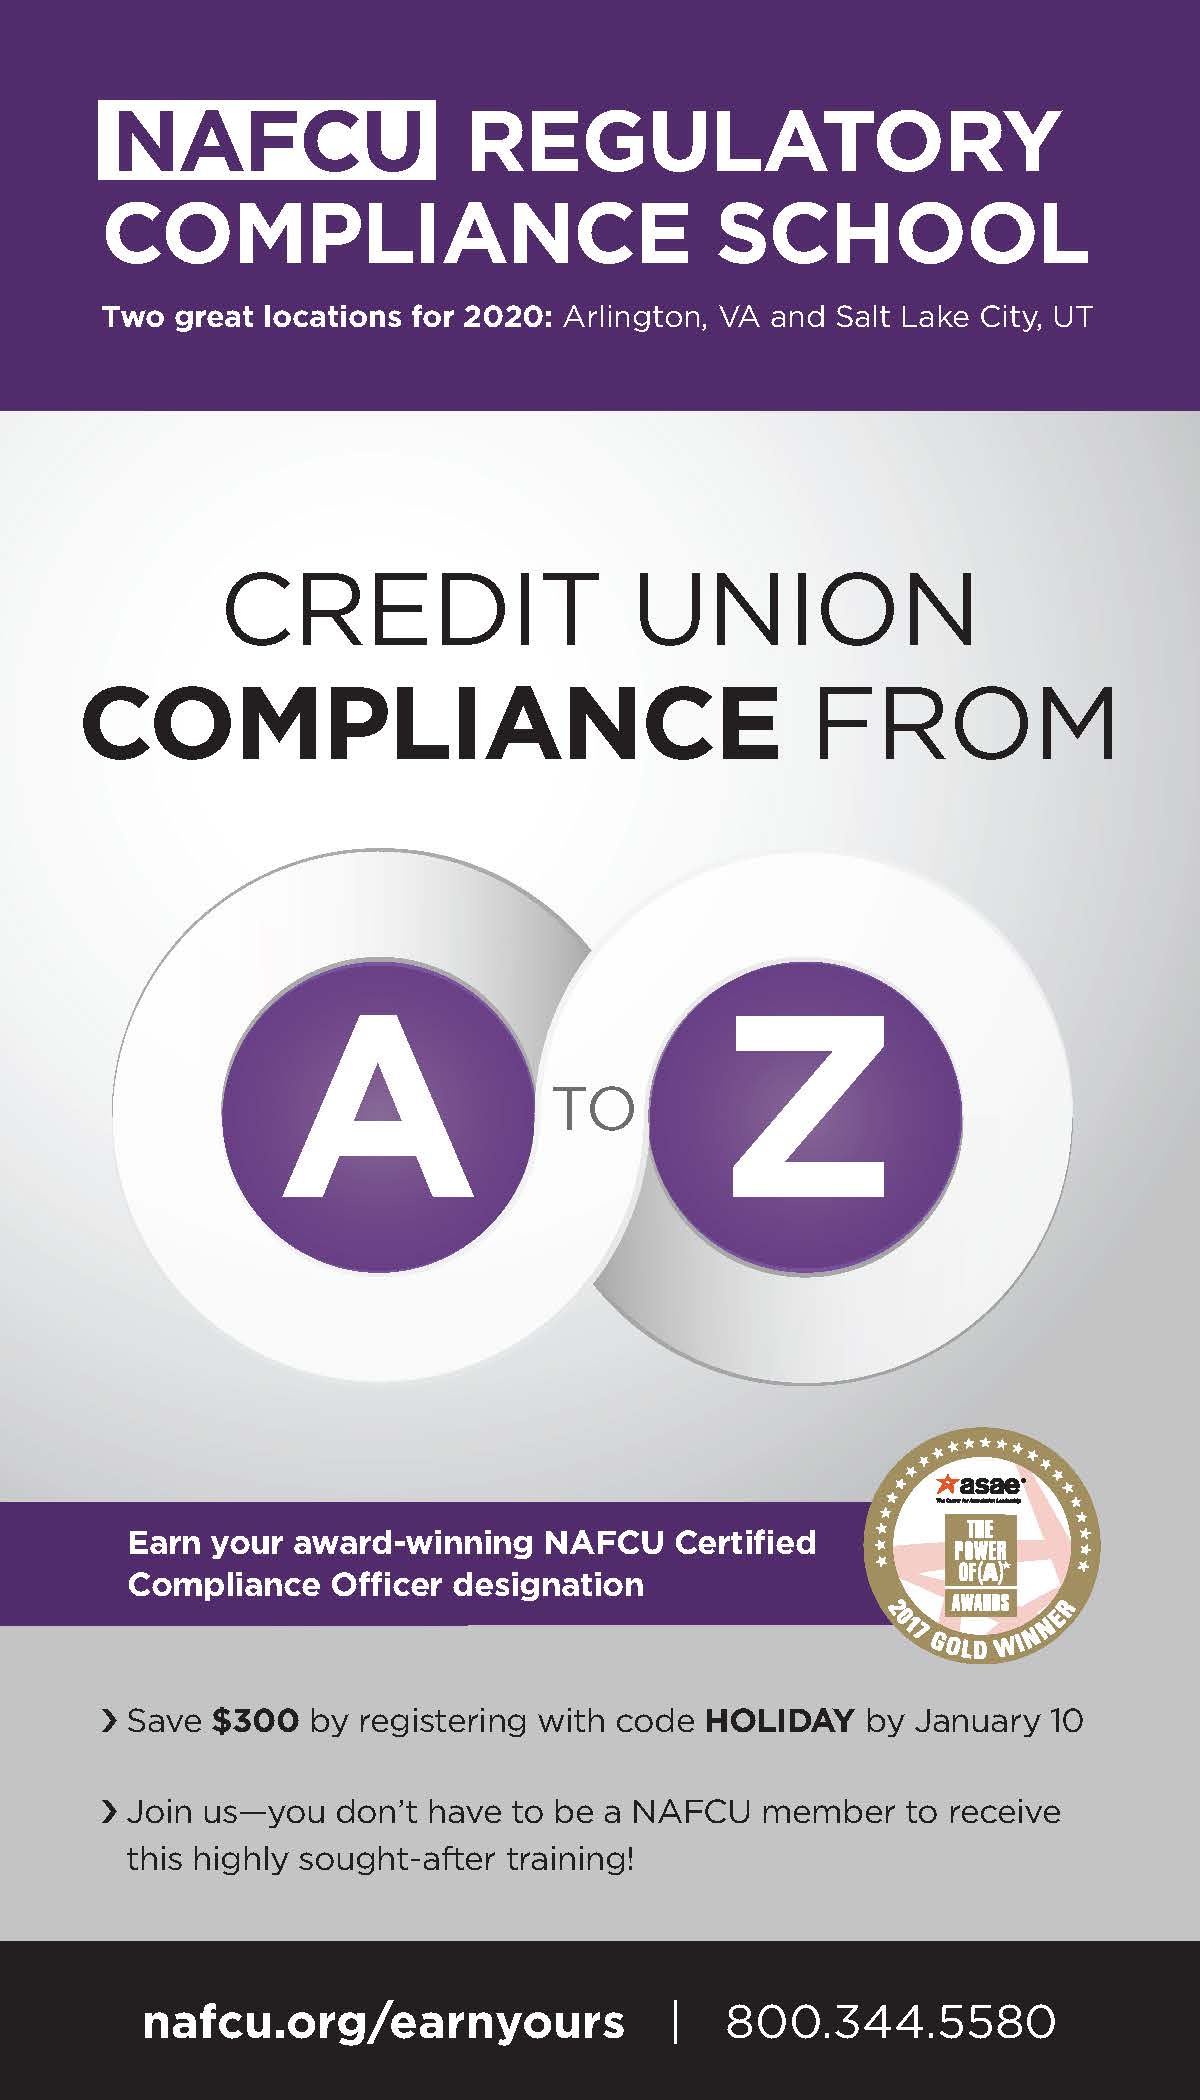 NAFCU 2020 Regulatory Compliance School Brochure